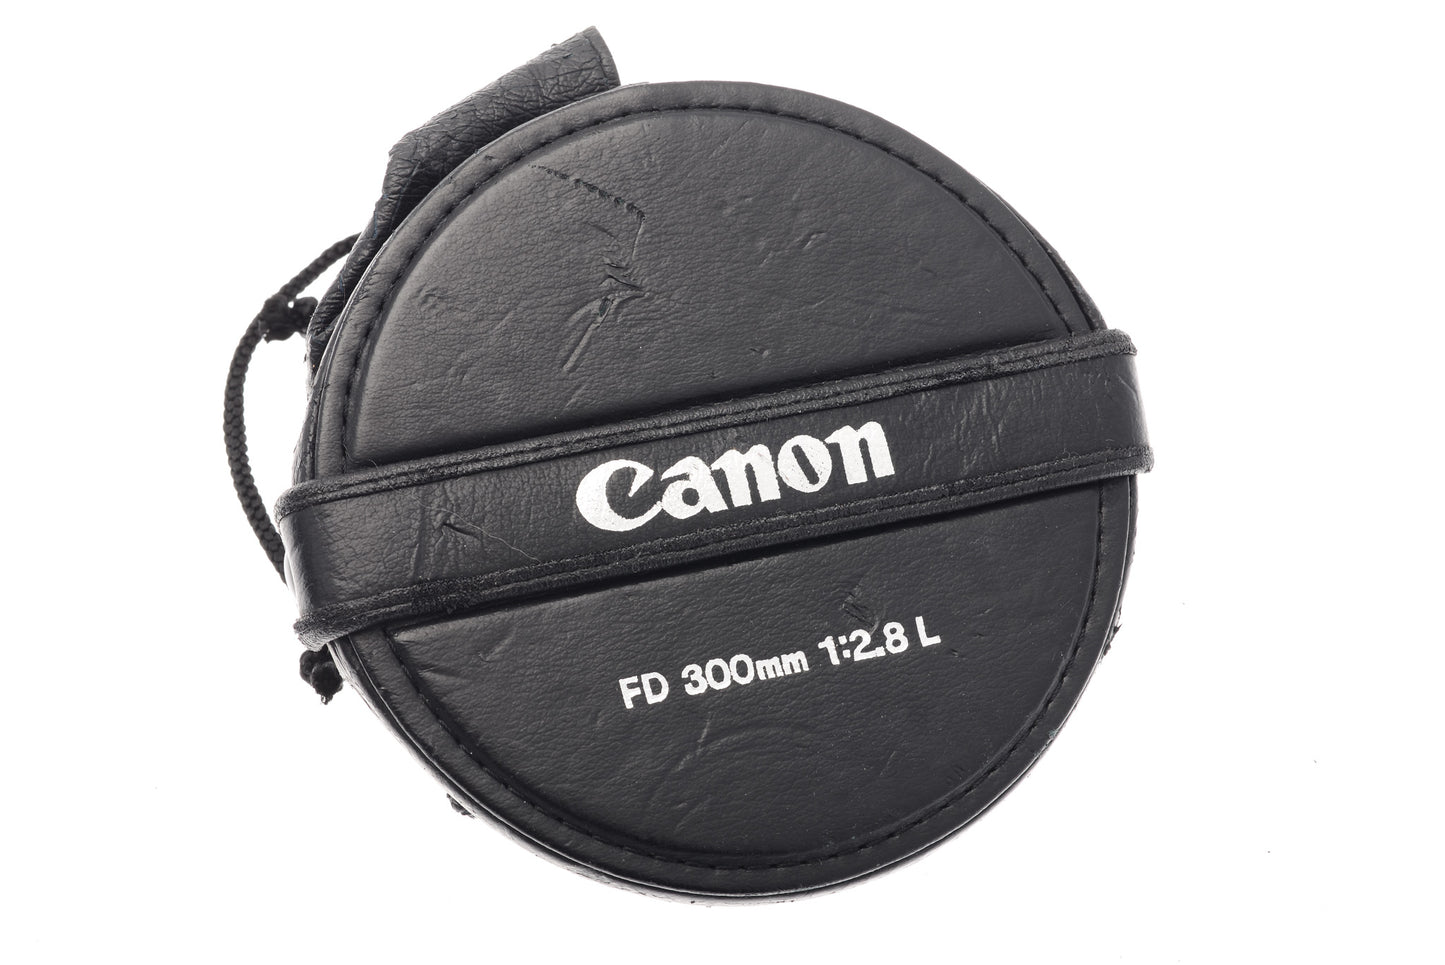 Canon Front Lens Cap for FD 300mm f2.8 L - Accessory